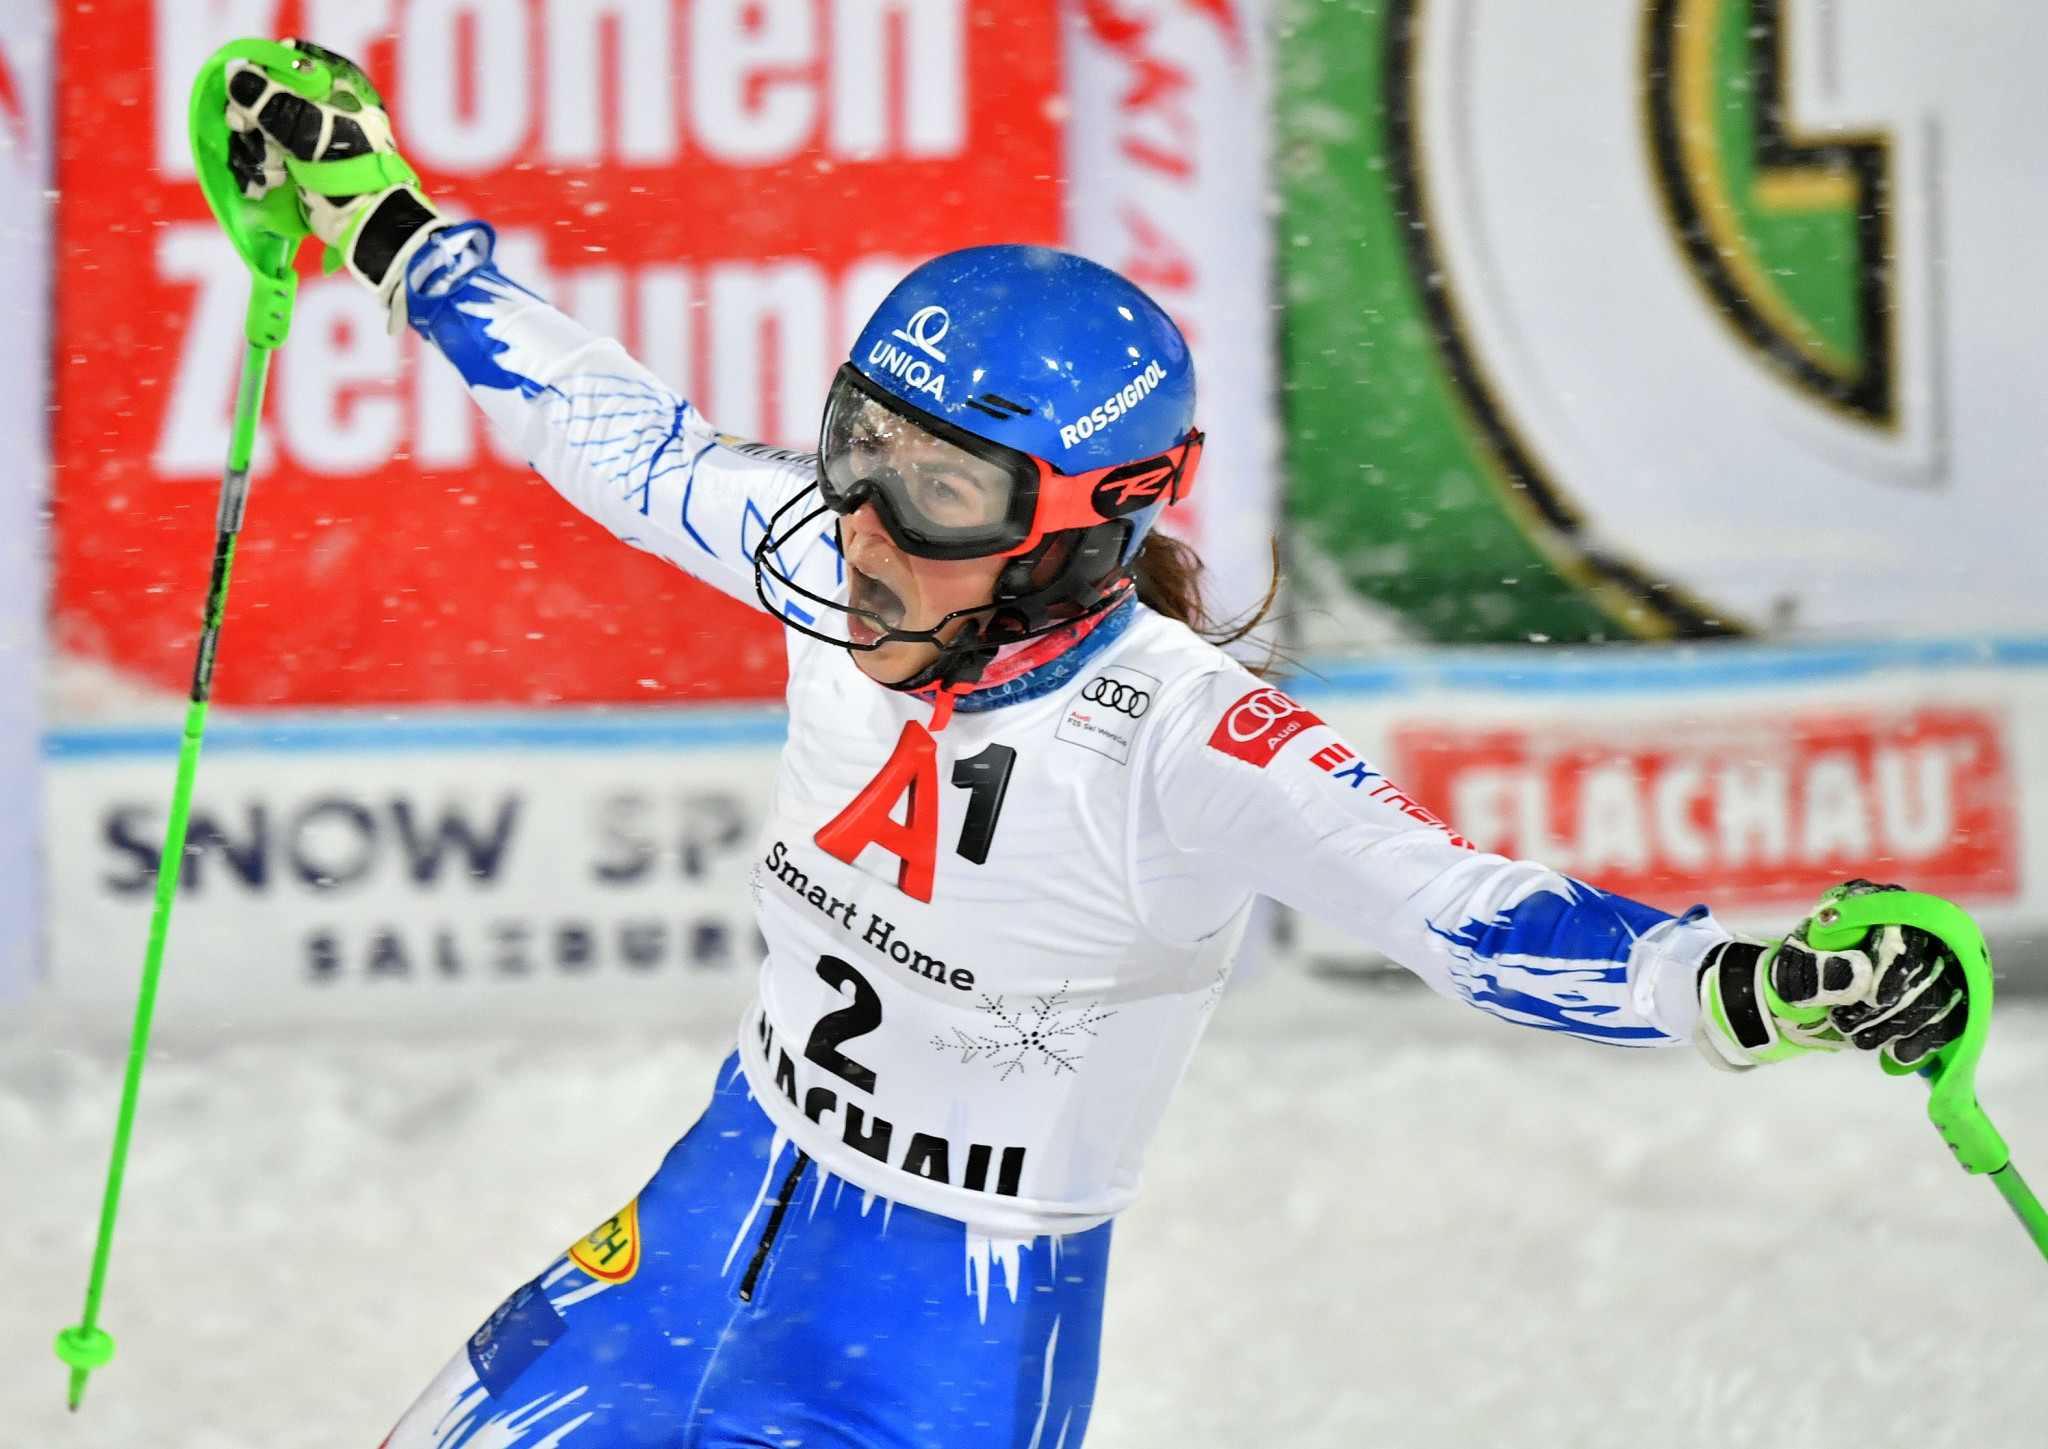 Vlhova beats Shiffrin amid blizzard conditions at Alpine Skiing World Cup in Flachau 